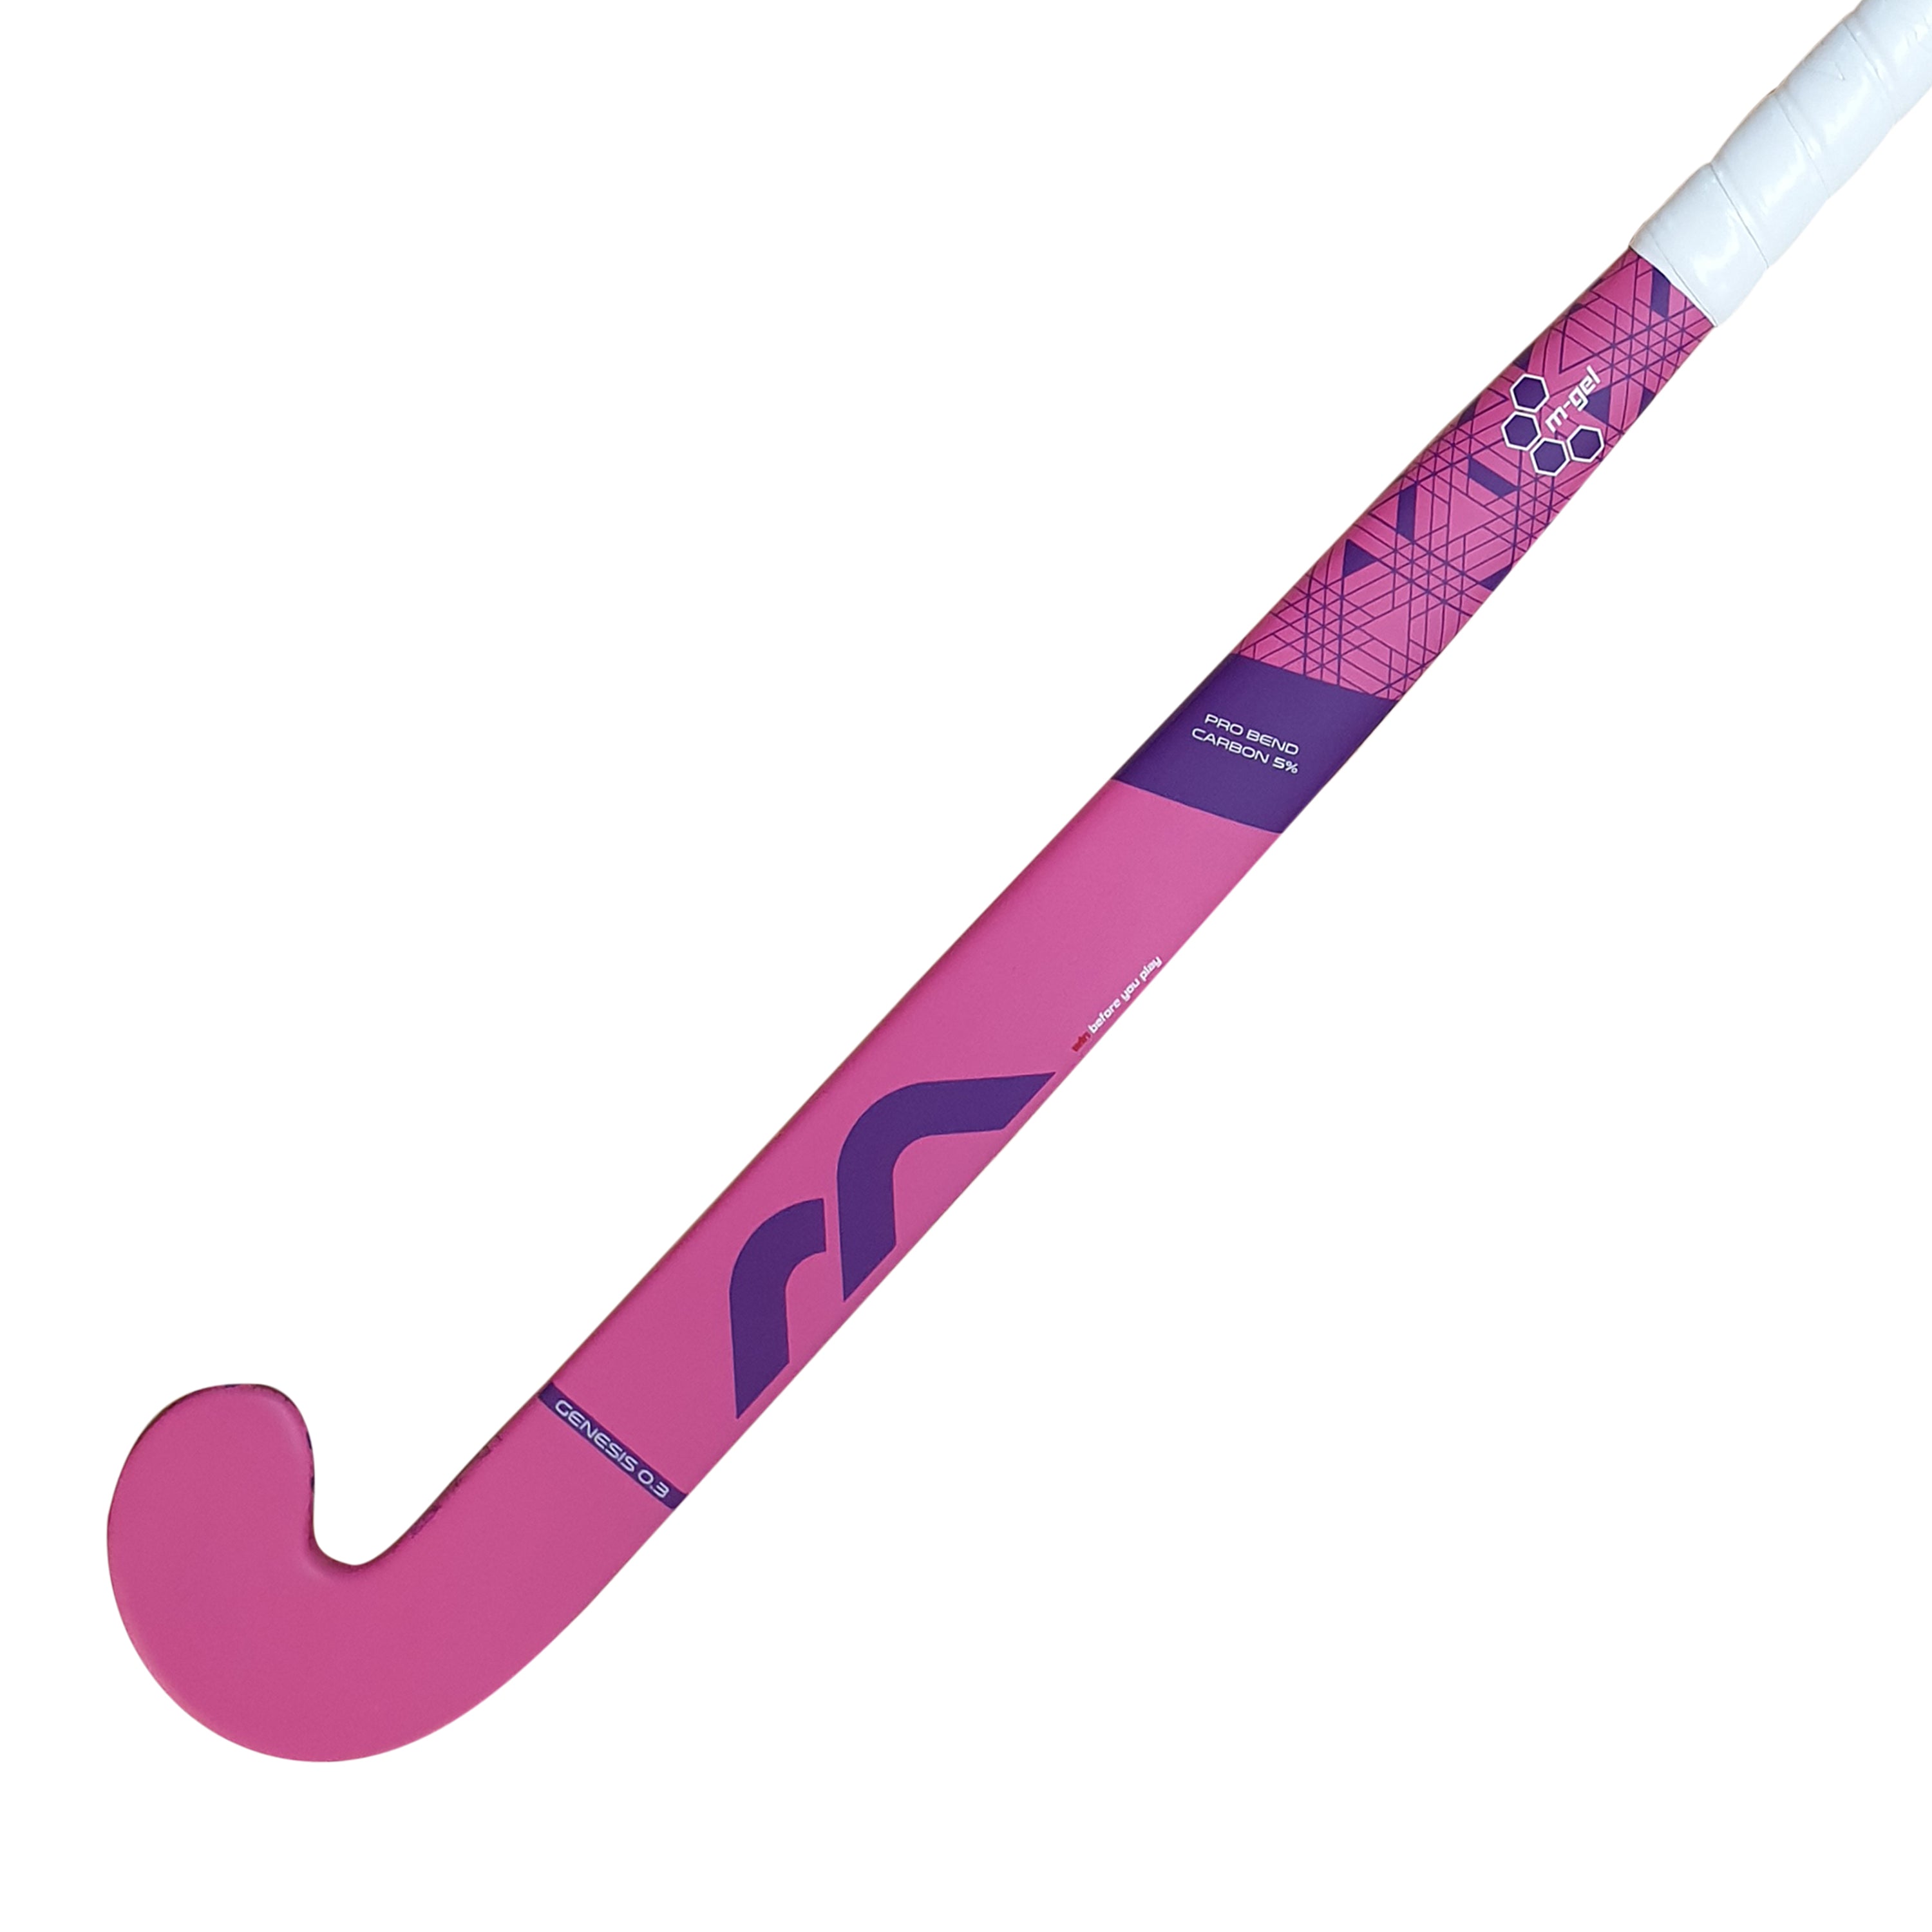 Mercian Genesis 0.3 Junior Hockey Stick - Pink-Bruntsfield Sports Online